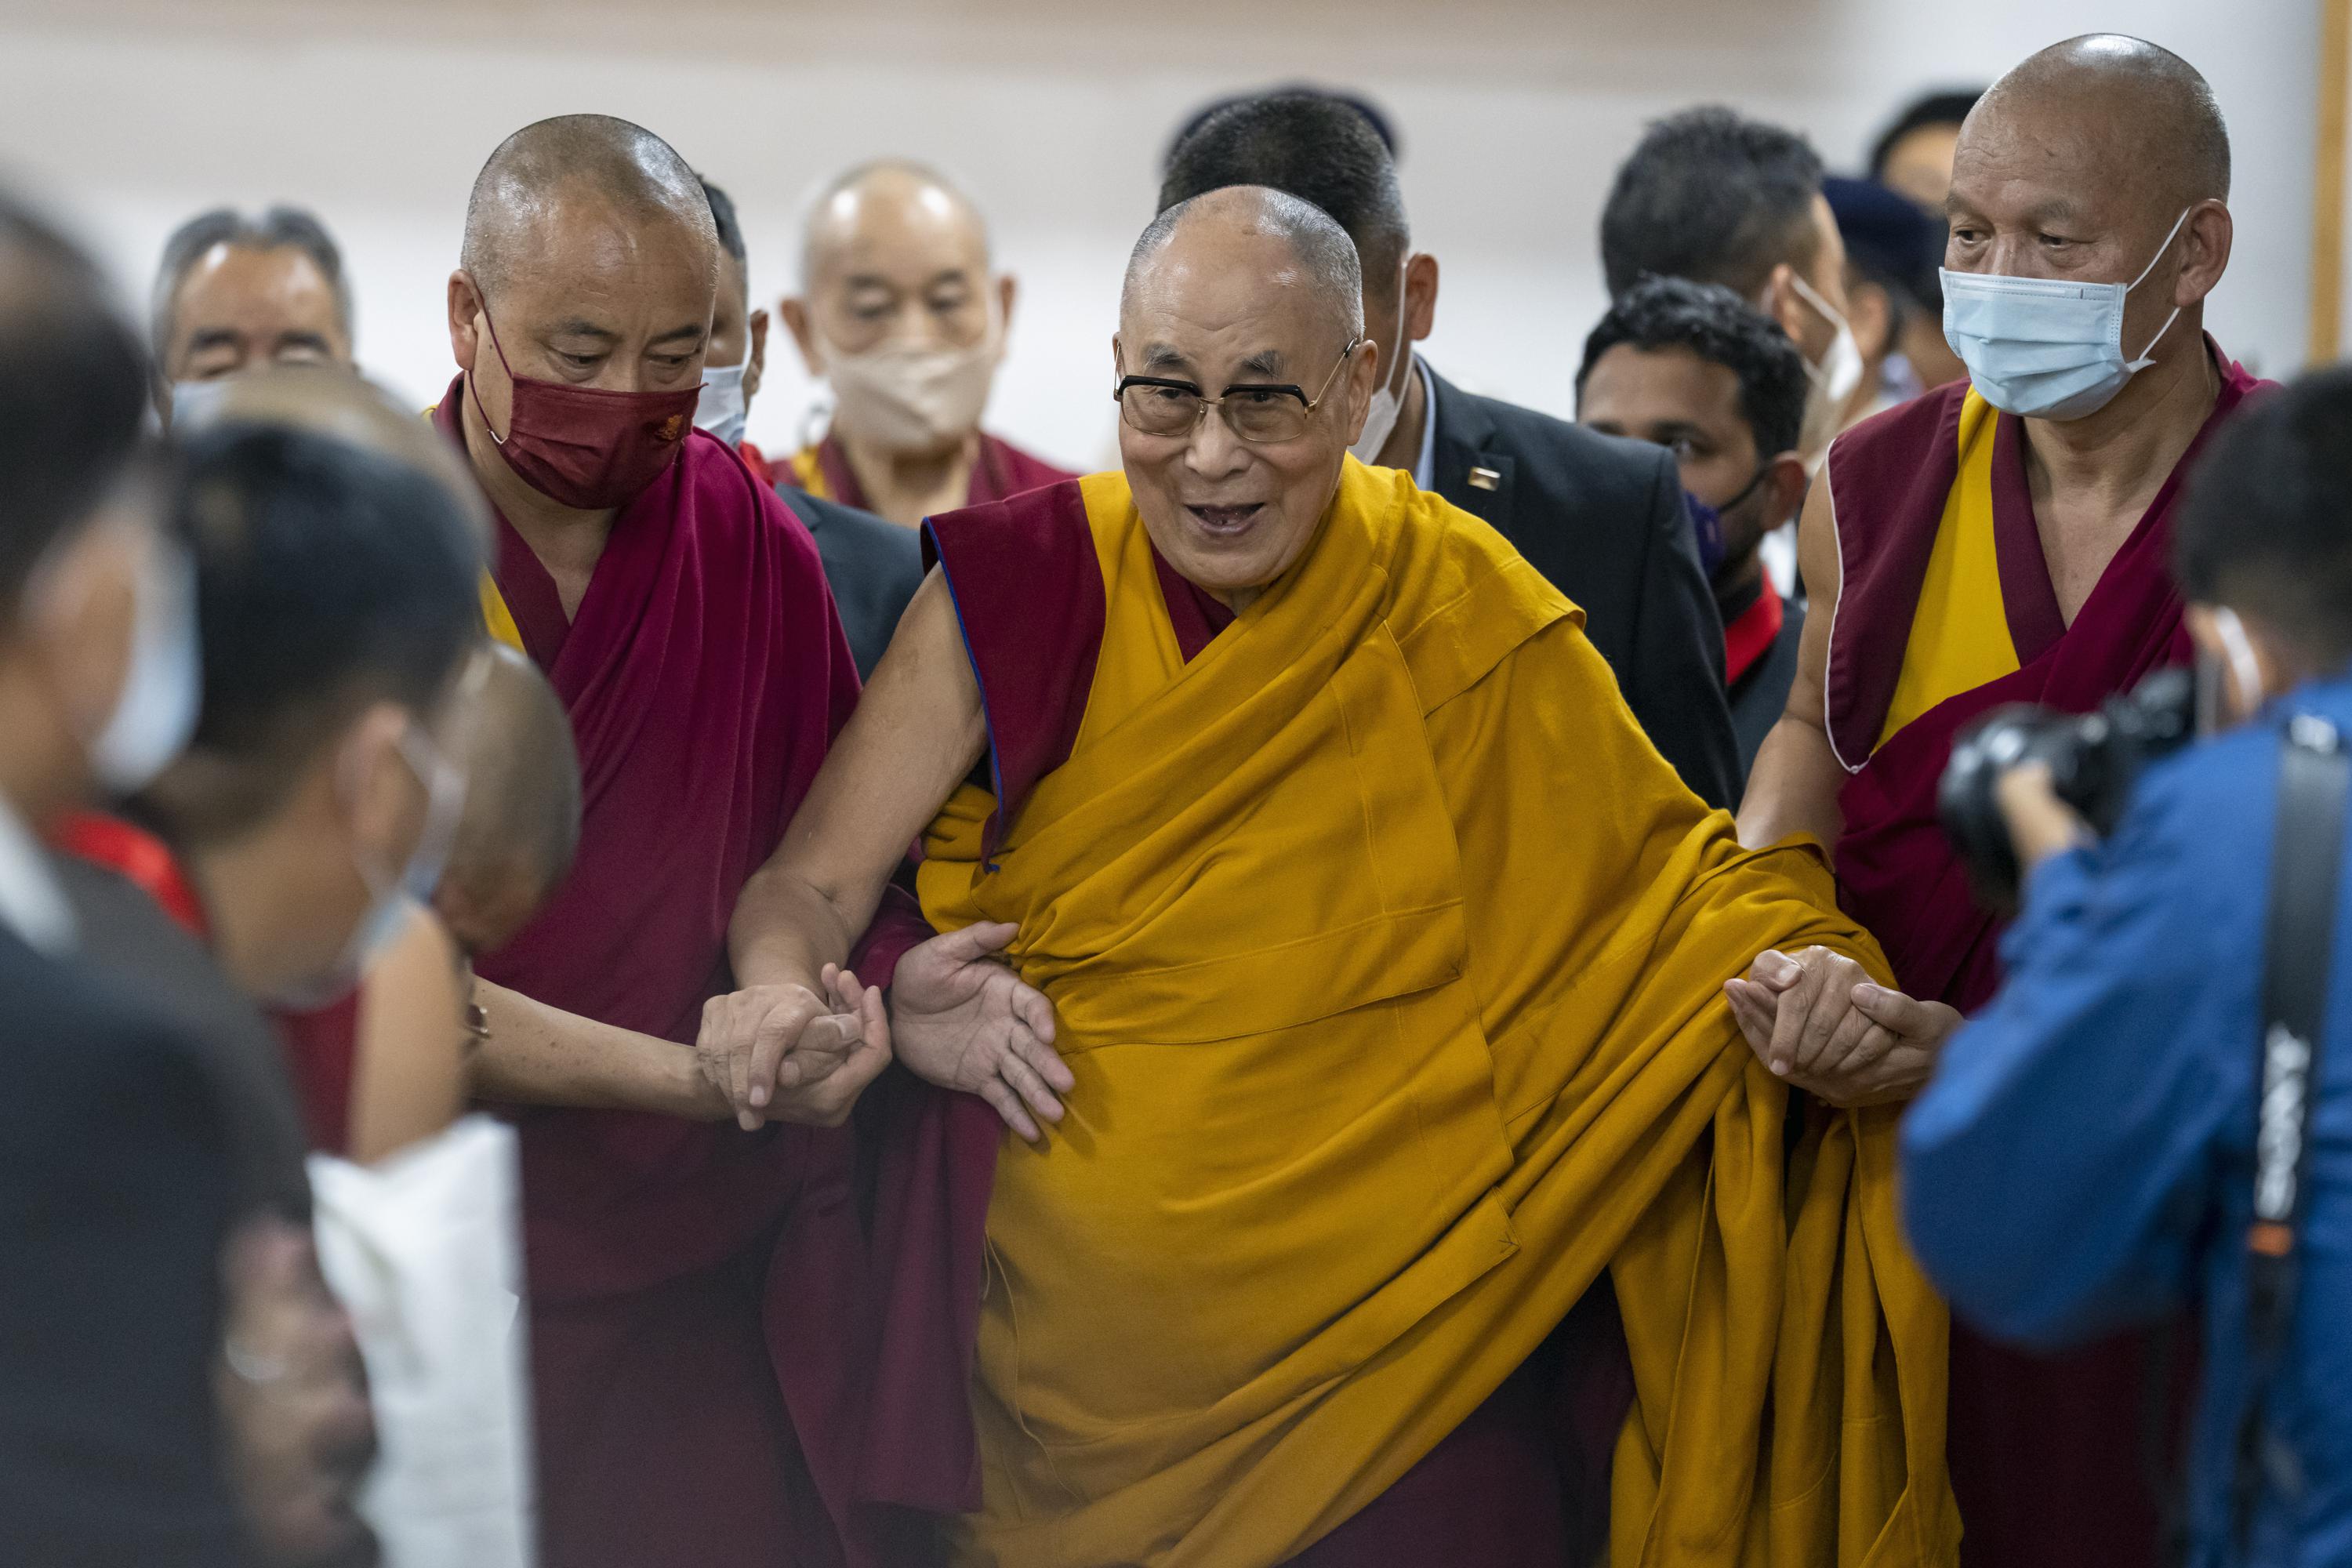 Dalai Lama Issues An Apology